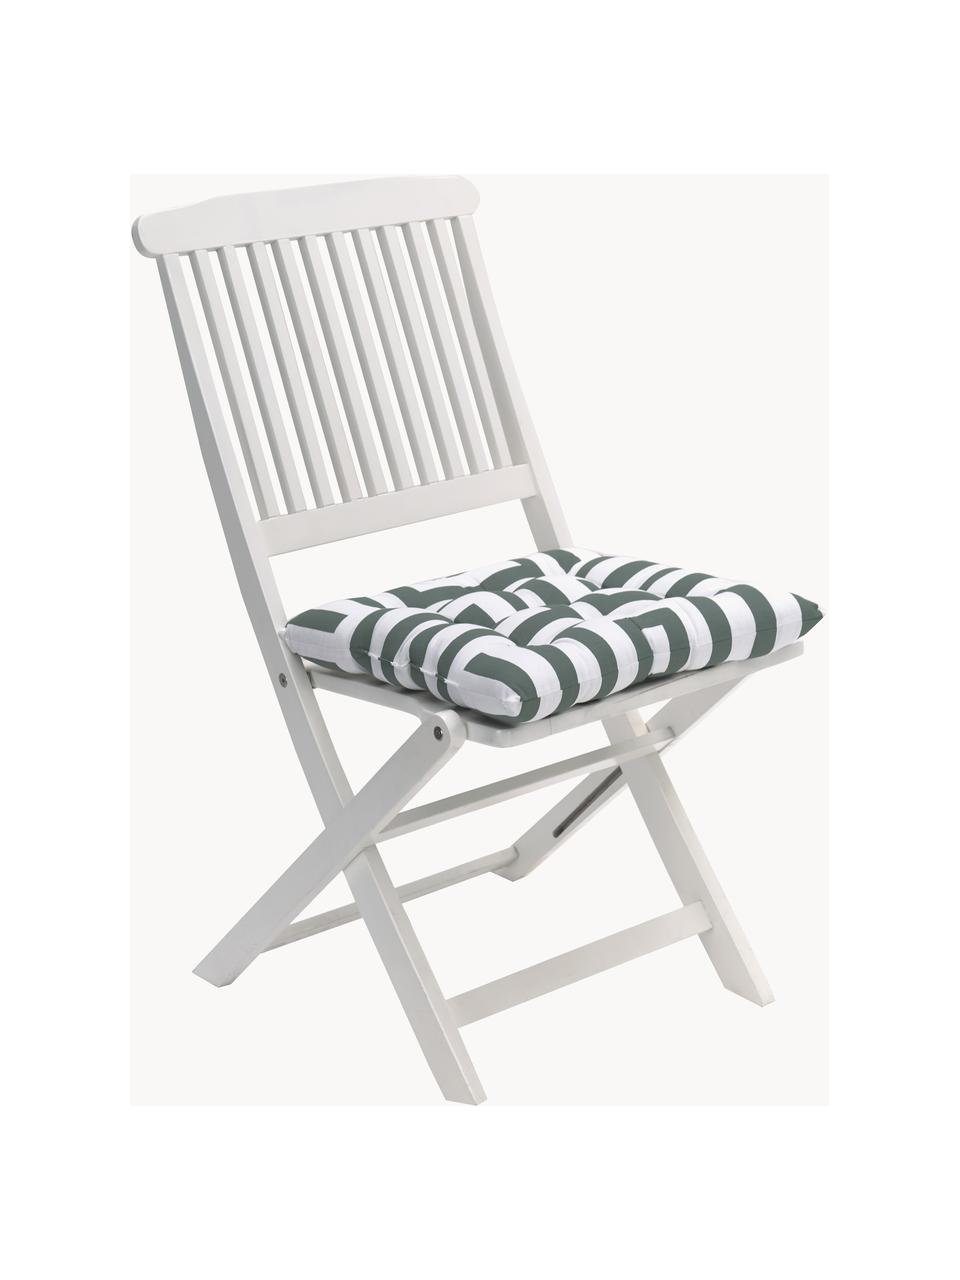 Coussin de chaise 40x40 motif vert Bram, Vert foncé, blanc, larg. 40 x long. 40 cm